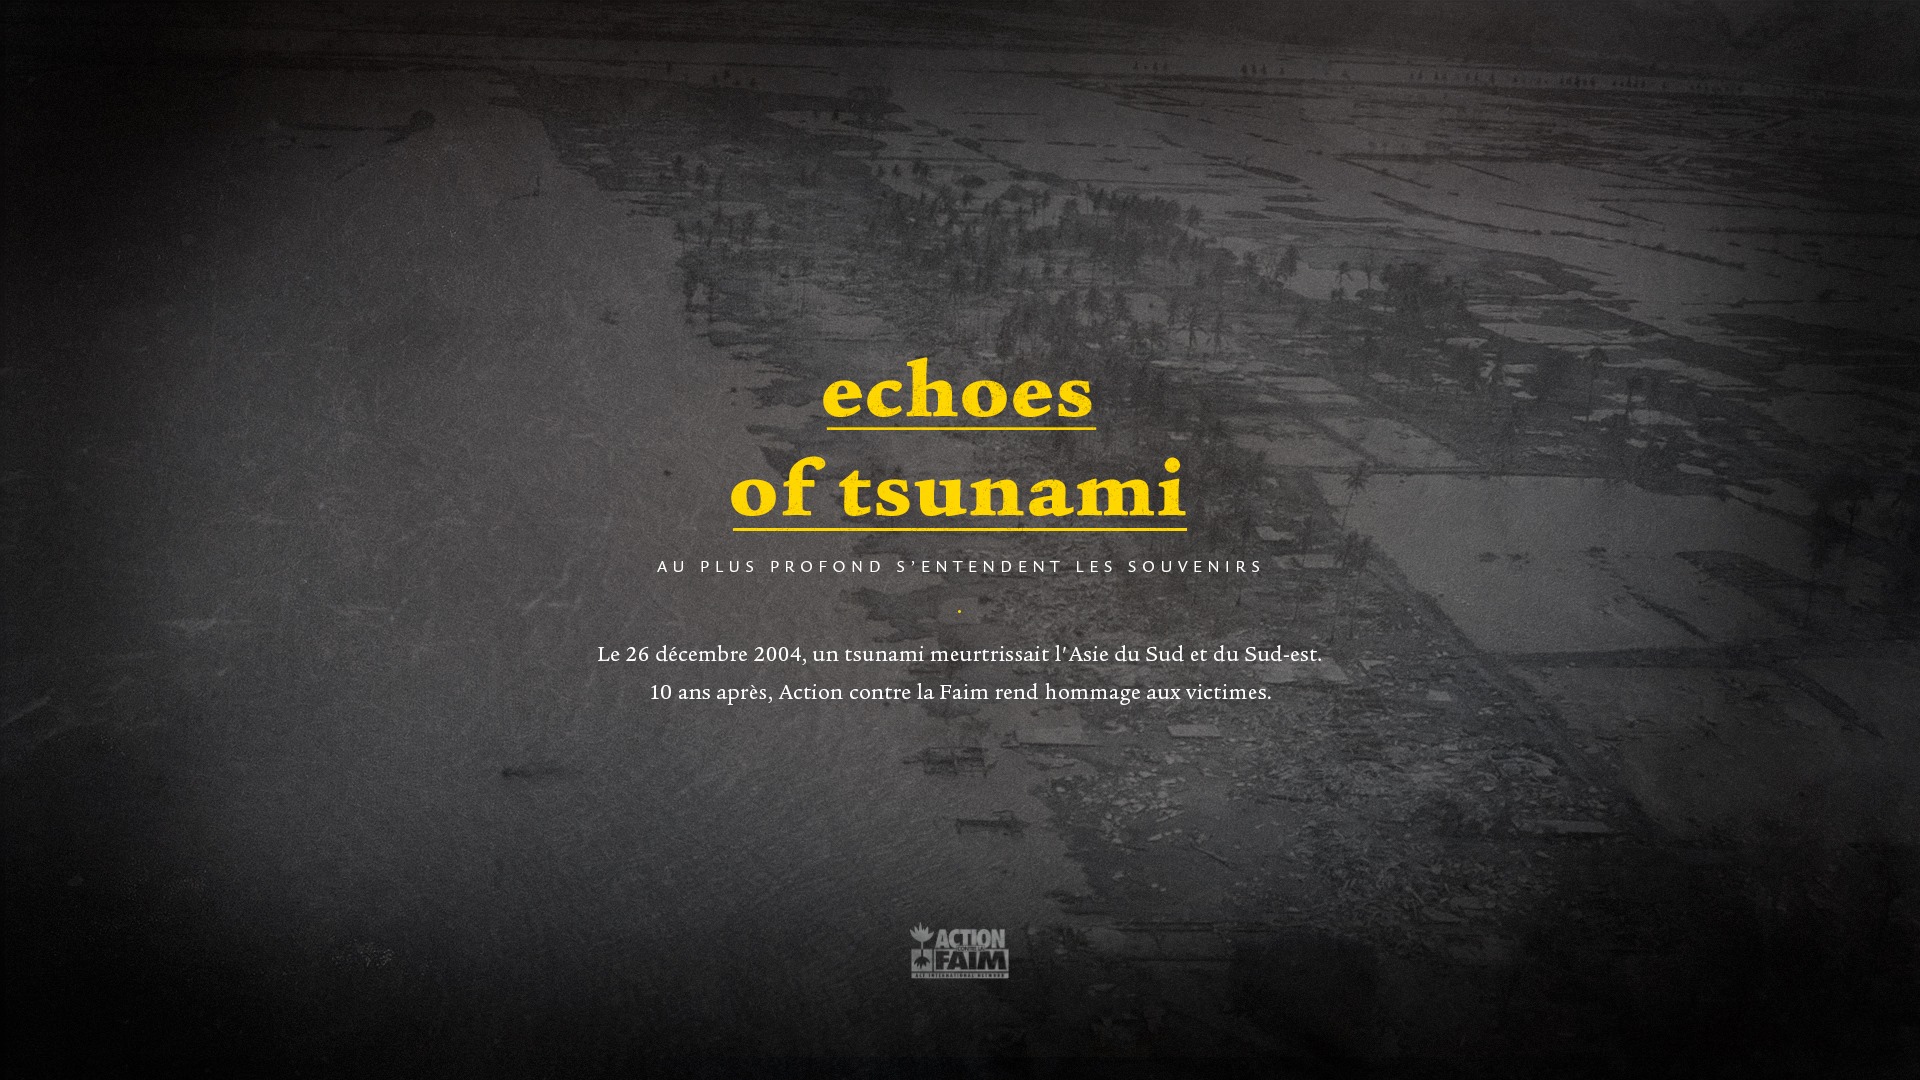 Echoes Of Tsunami